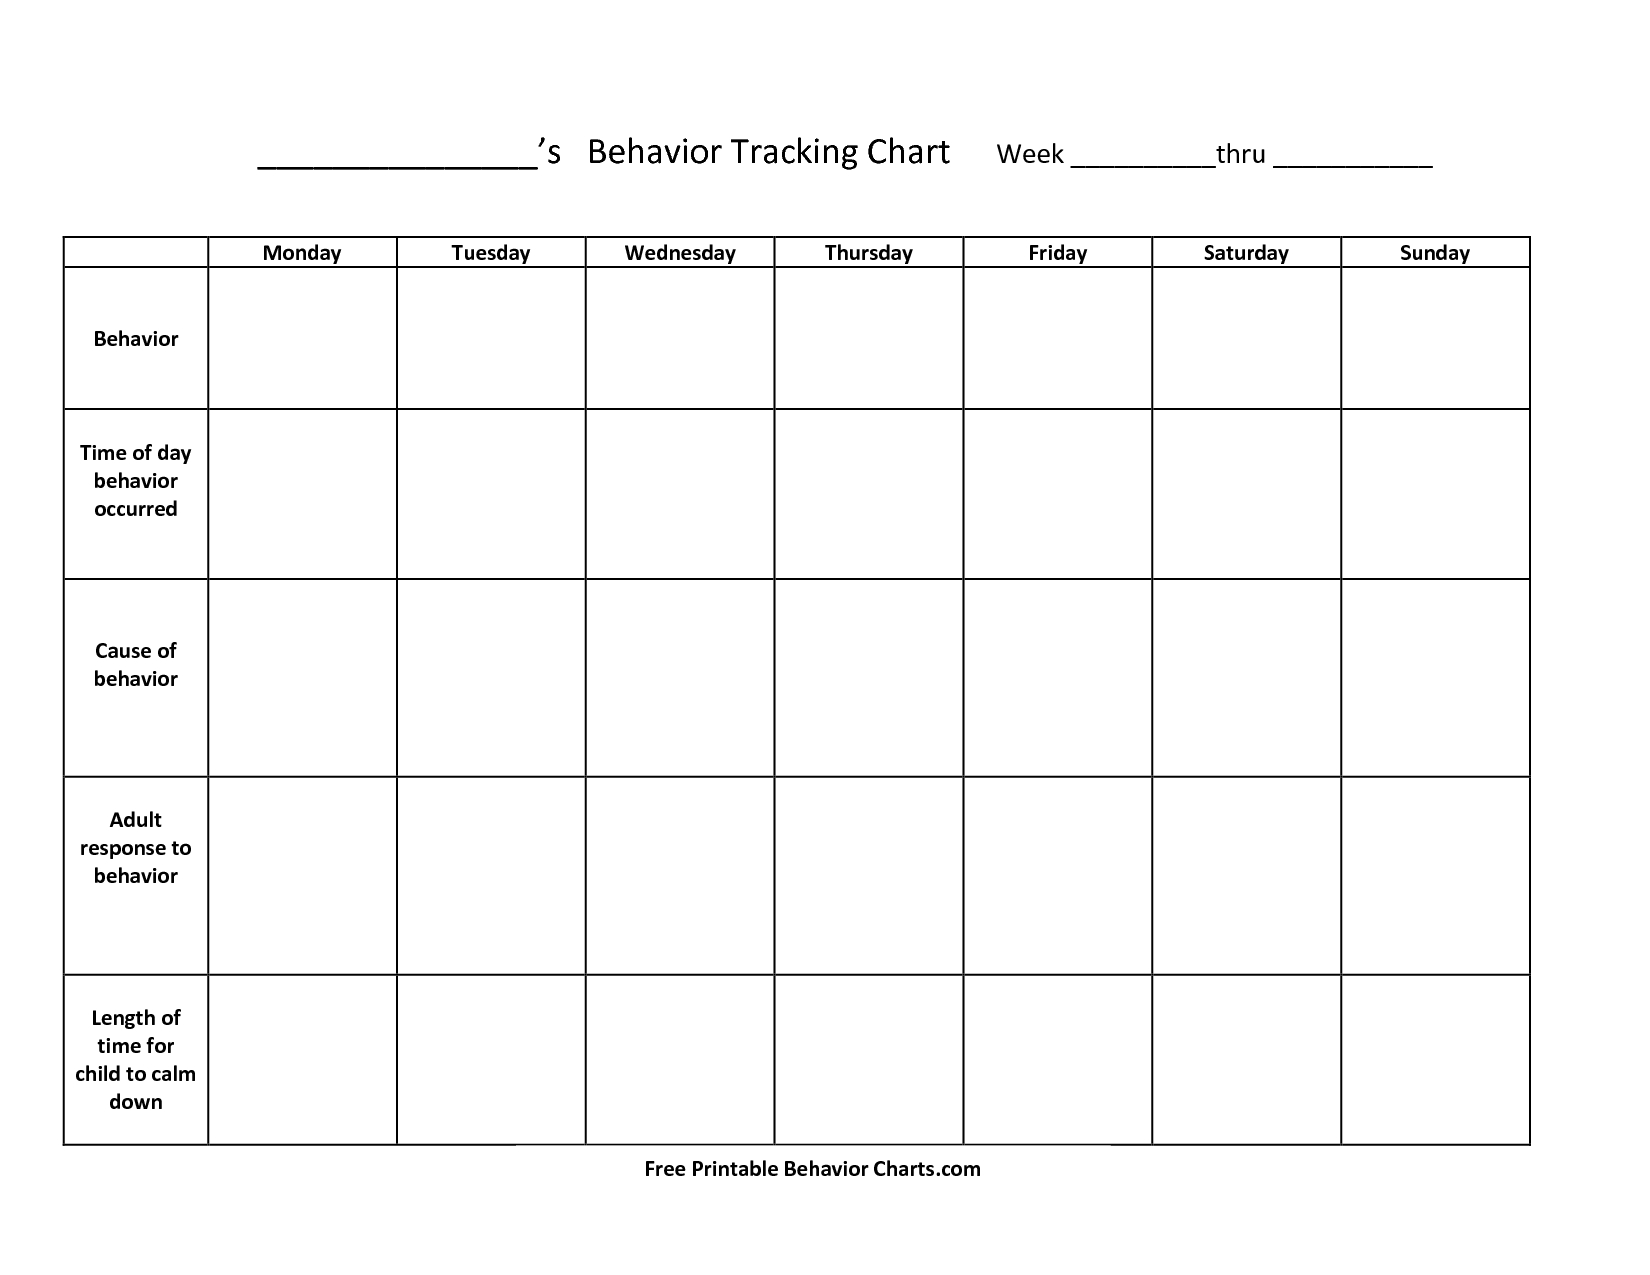 Free+Printable+Behavior+Charts+For+Teachers | Things To Try | Free - Free Printable Charts For Classroom